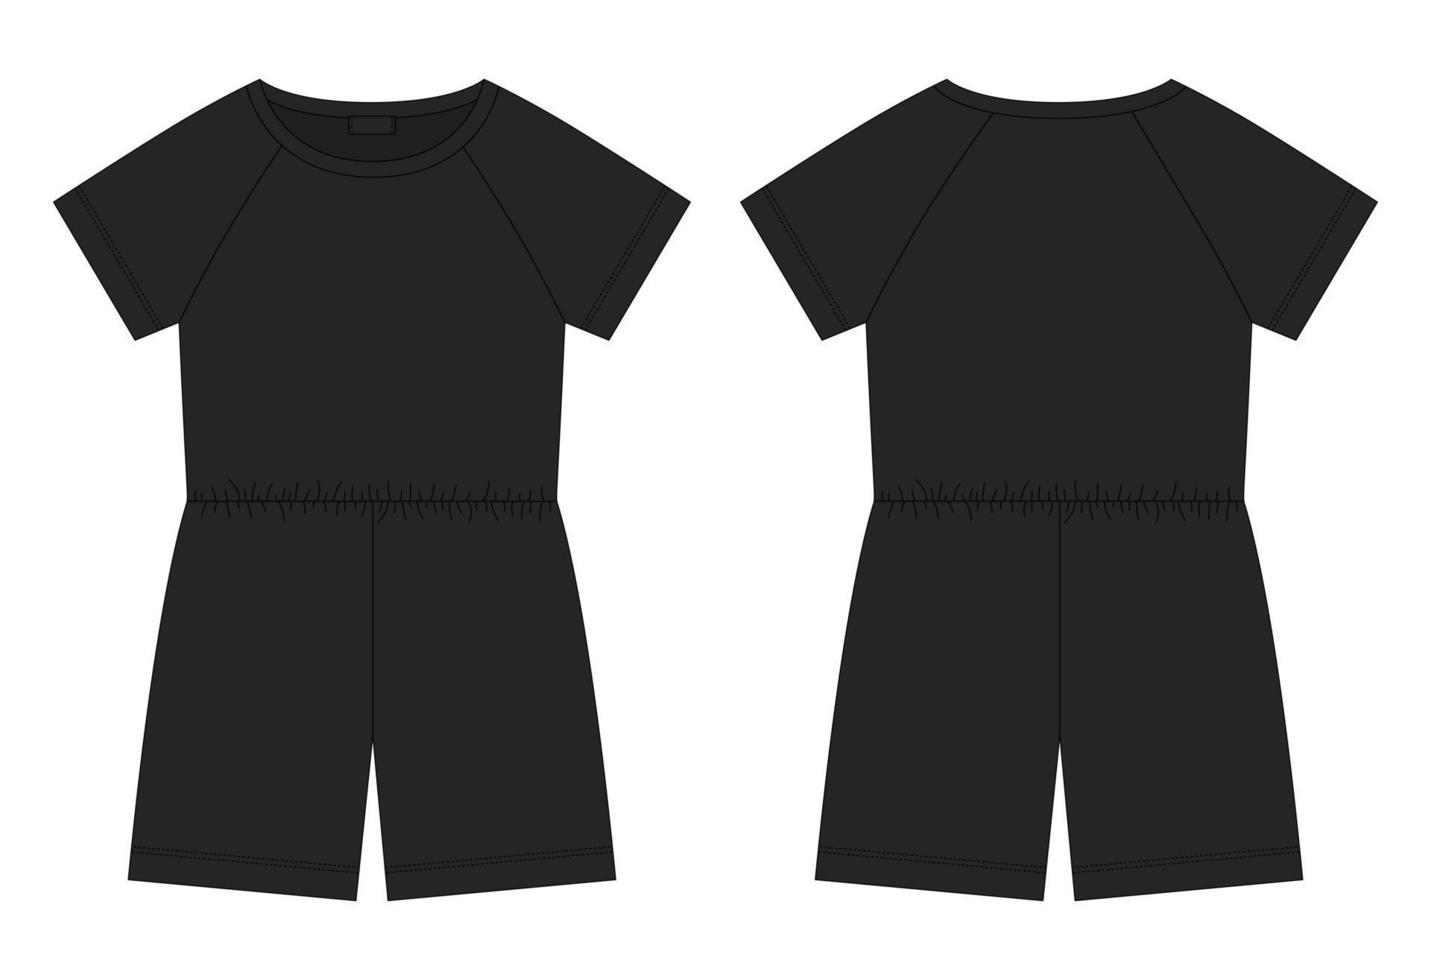 Cotton oversized raglan jumpsuit technical sketch. Black color. Women's romper design template. vector